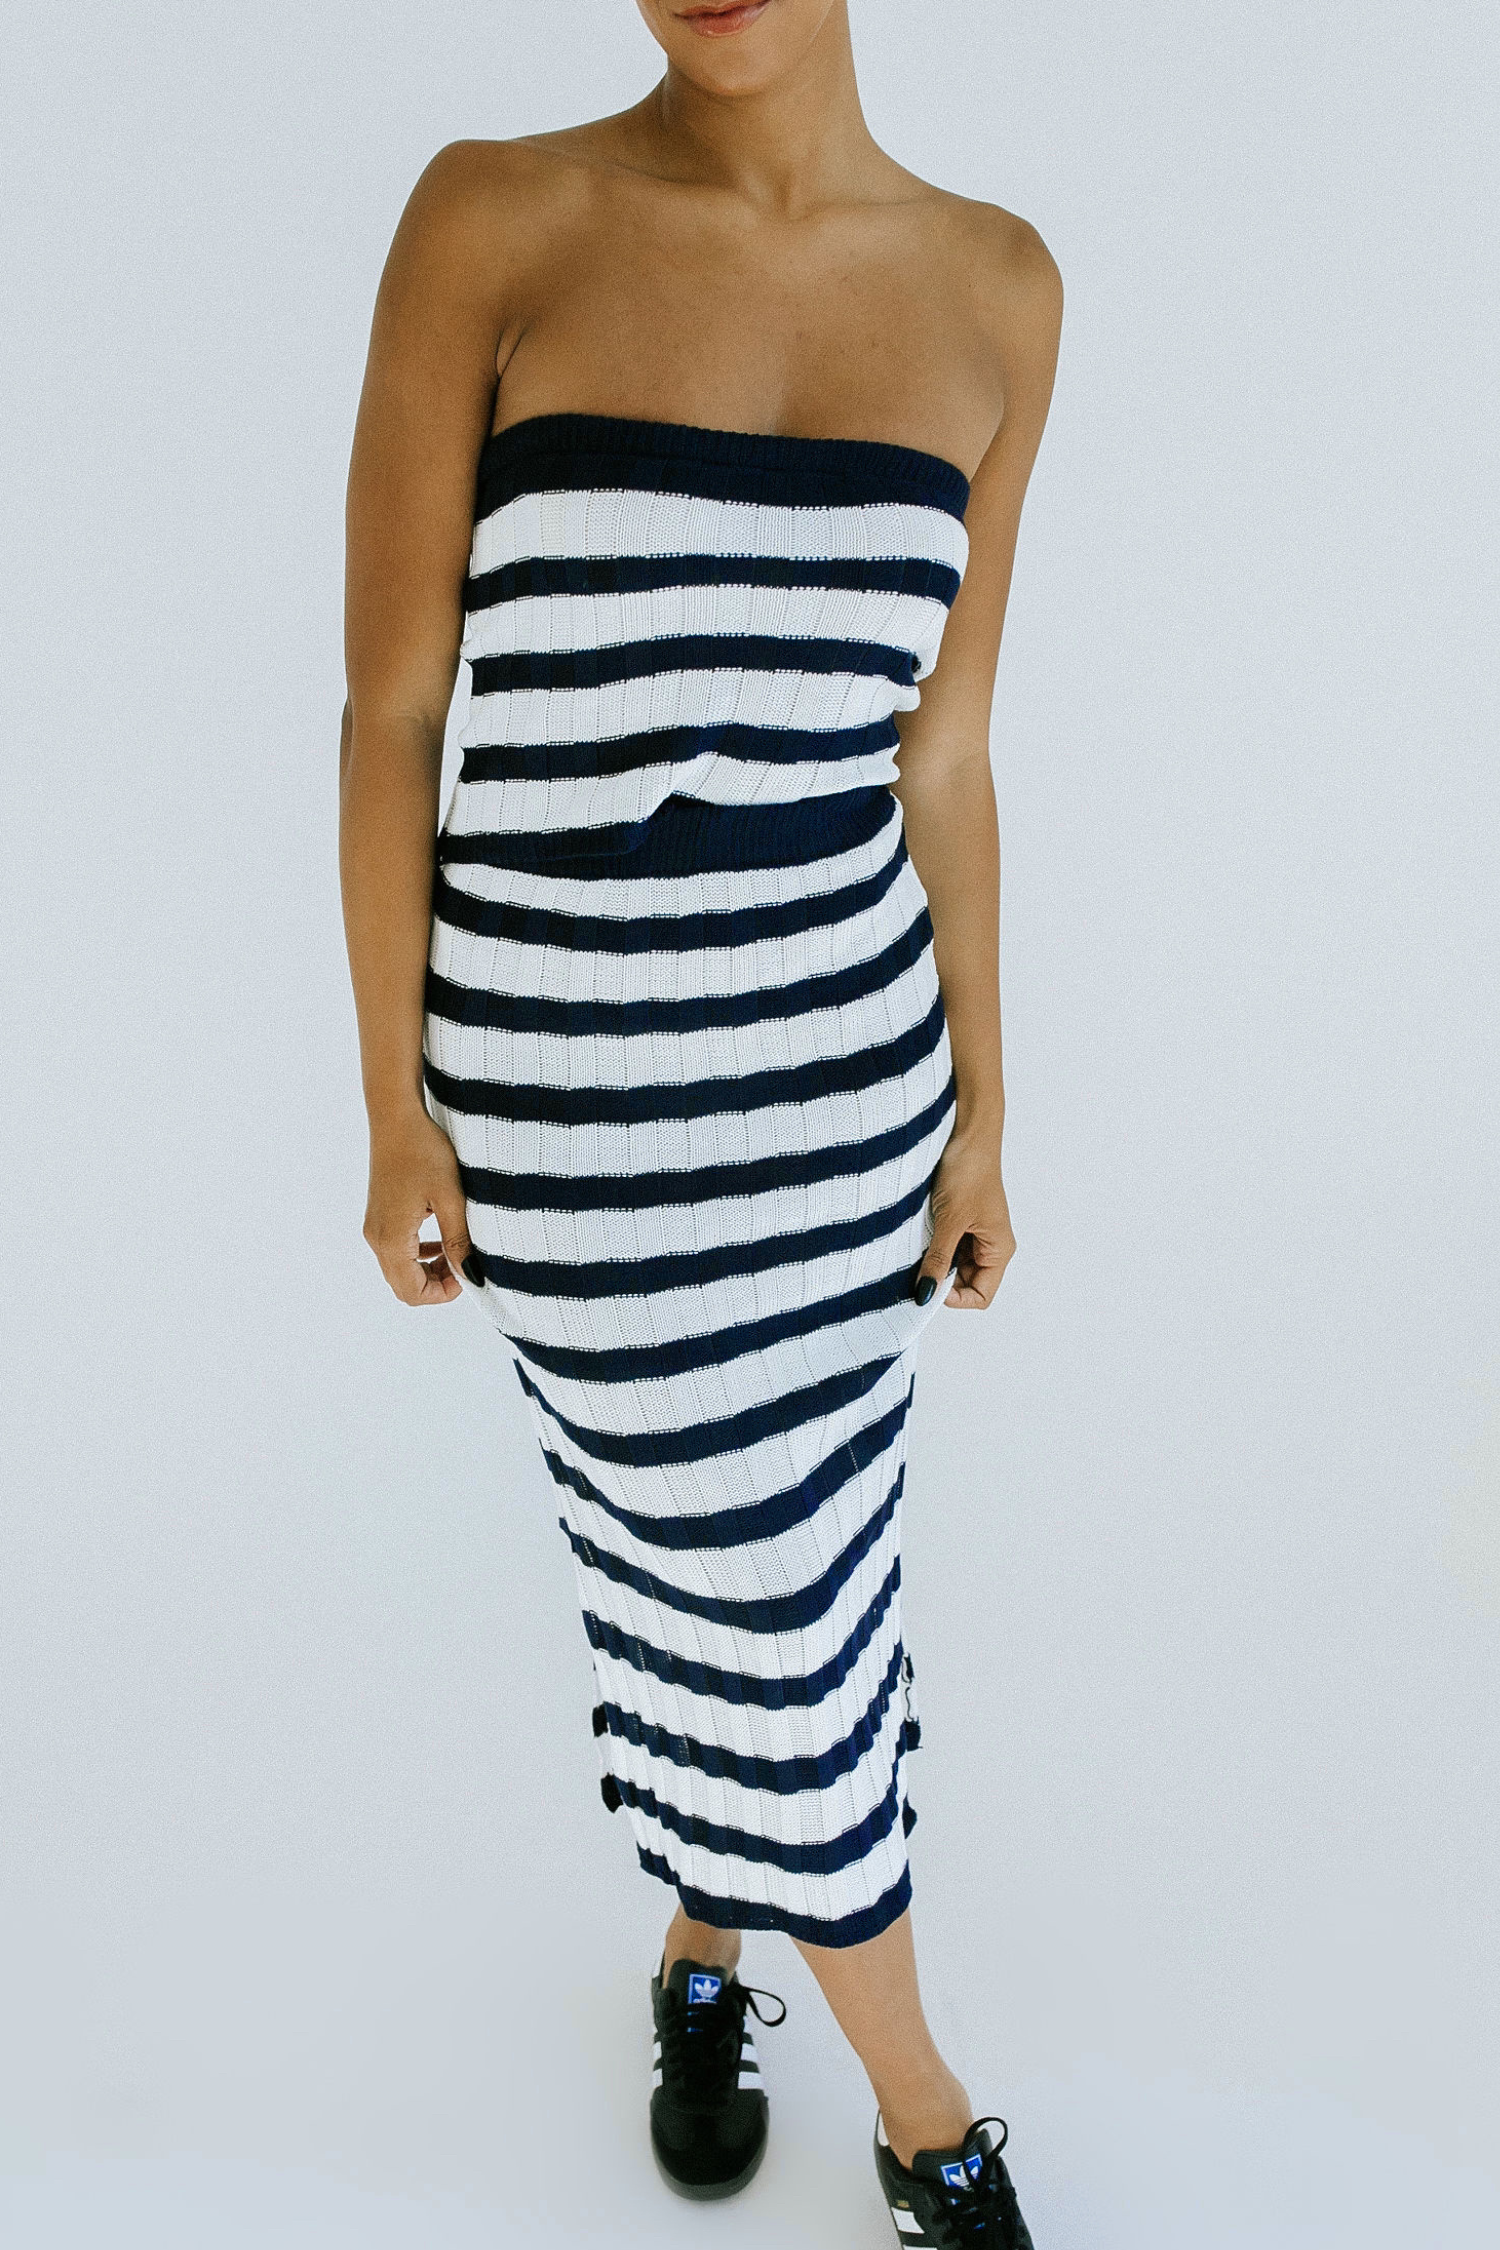 Chantelle Striped Top + Skirt Set - Navy + White